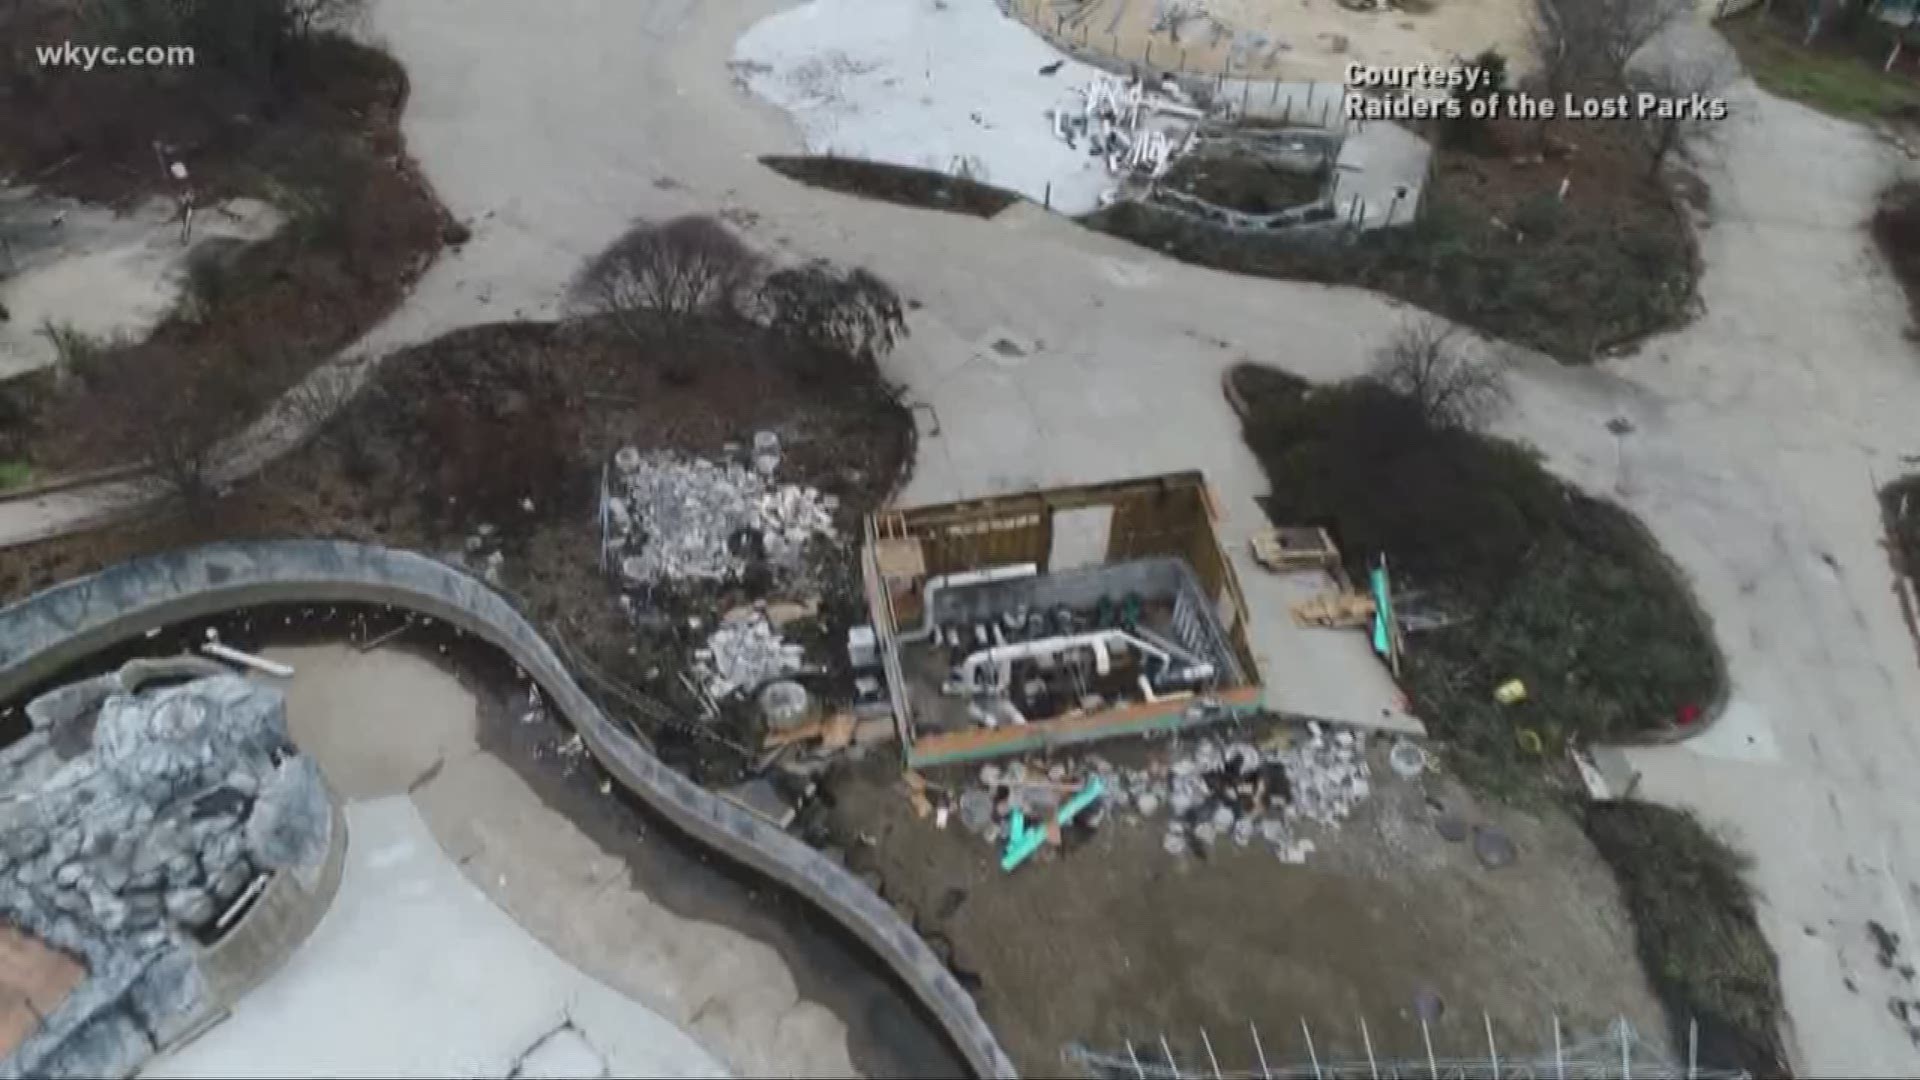 Video shows Wildwater Kingdom waterslides demolished